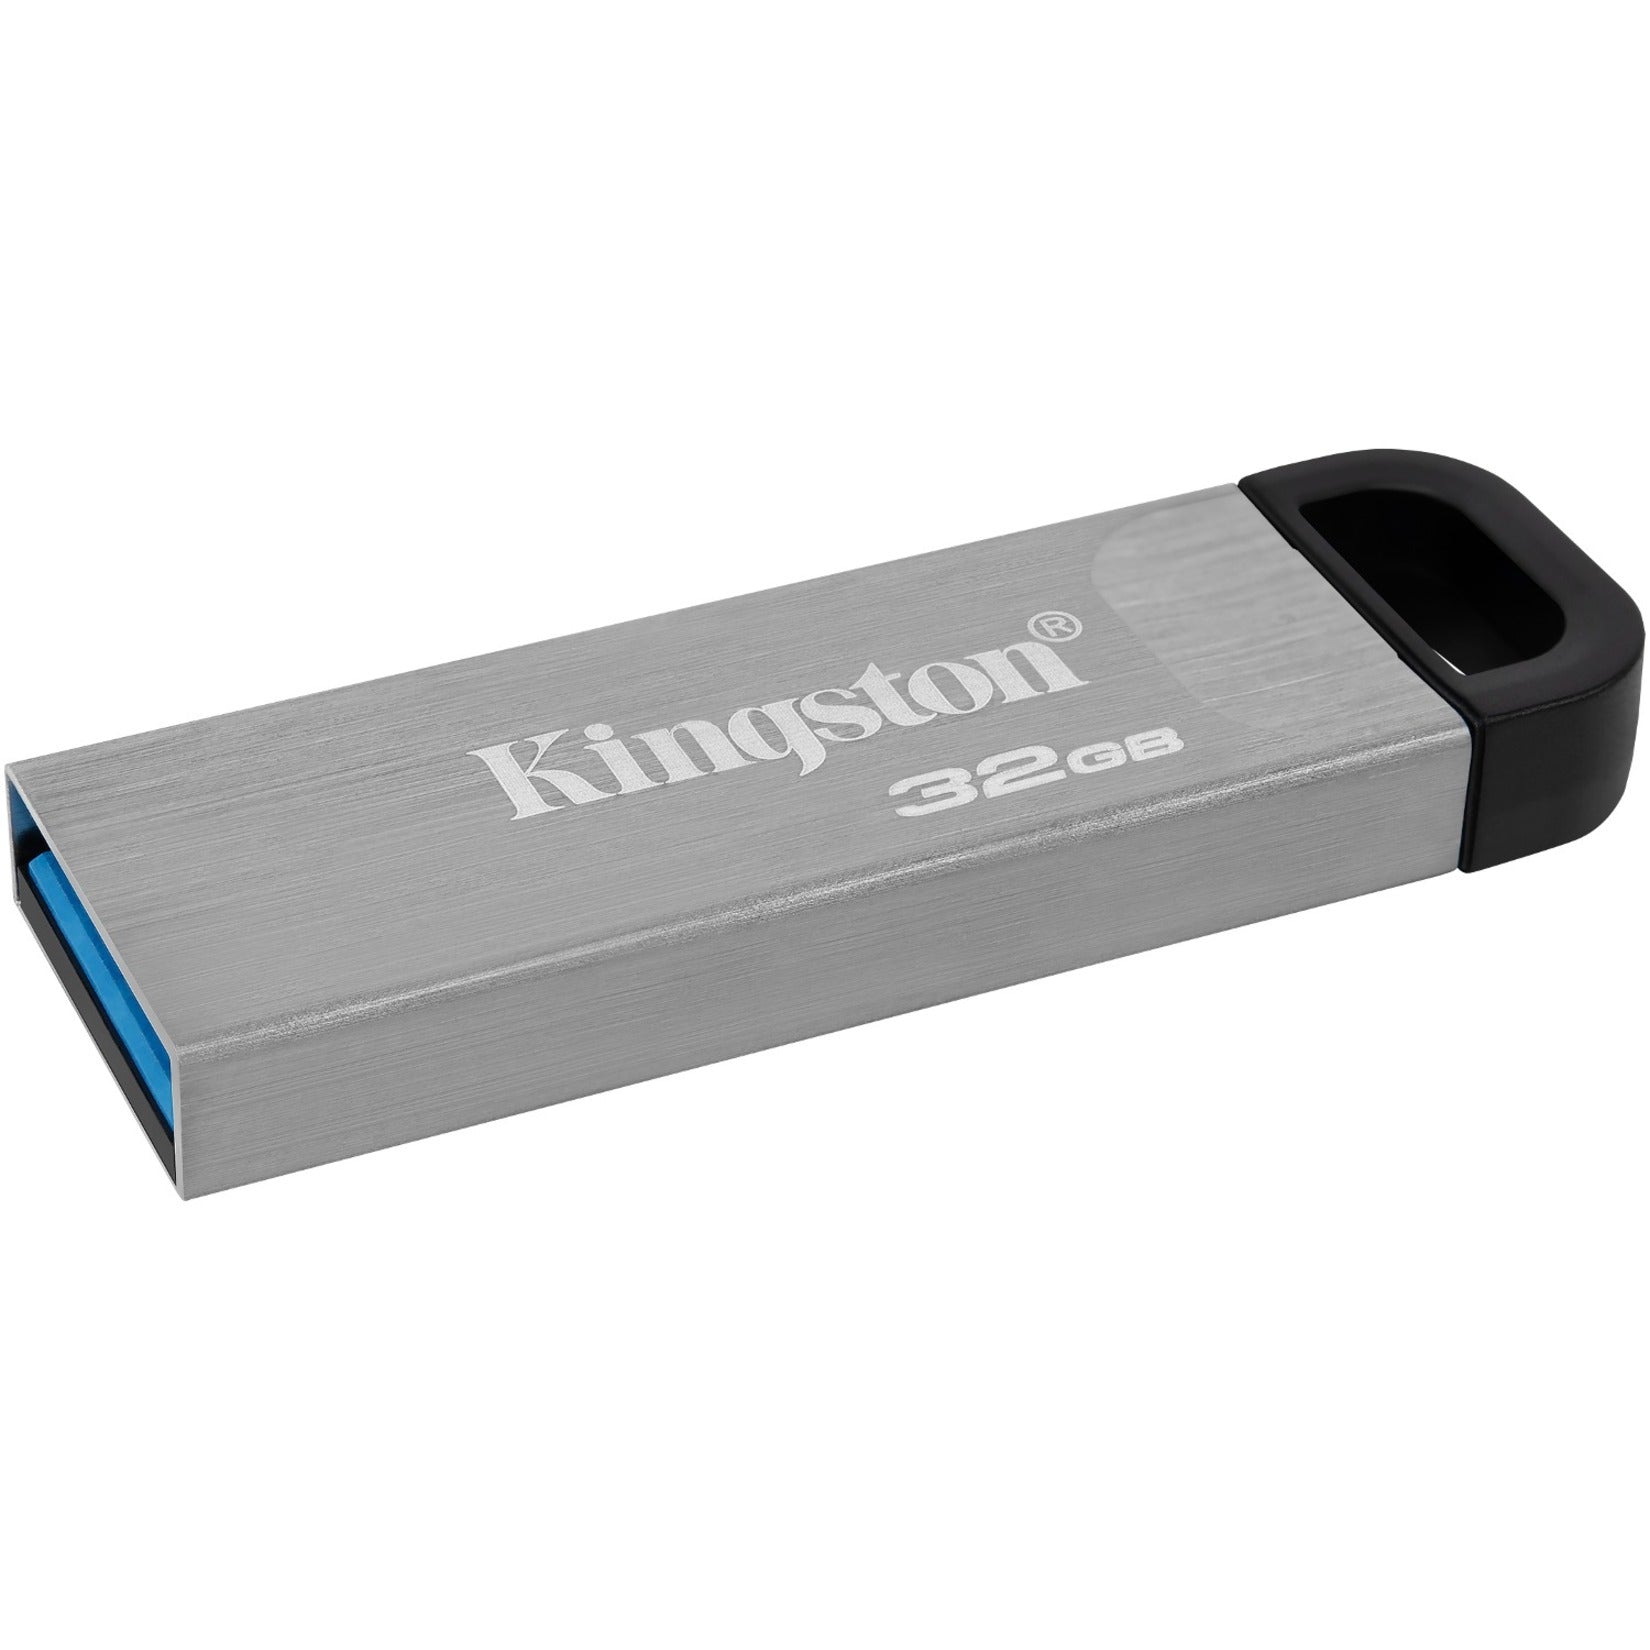 Wholesale usb kingston 32gb Instant Memory For Data Storage 